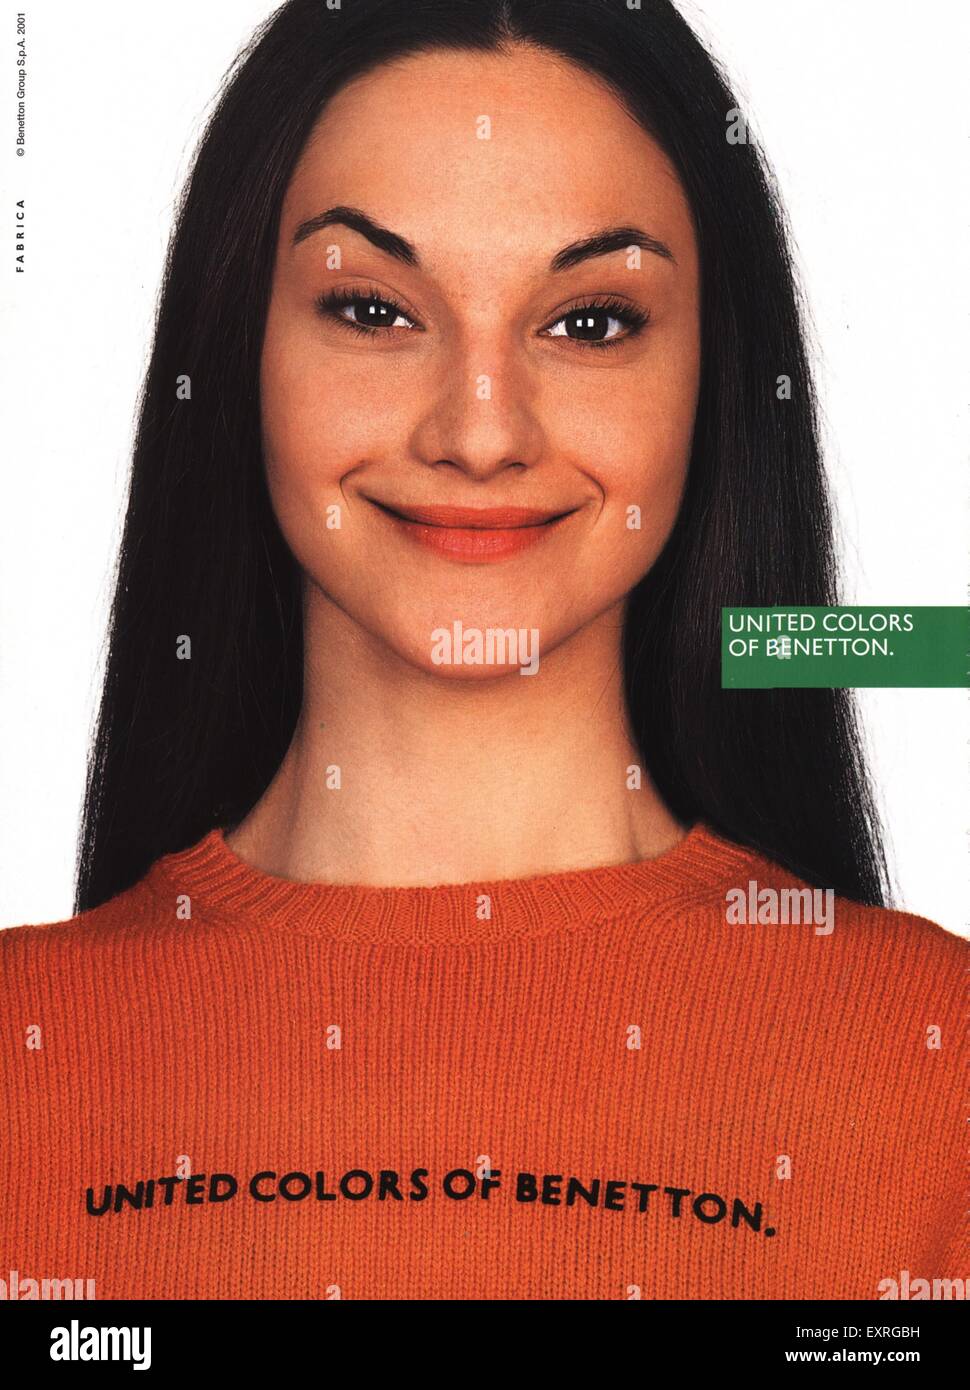 2000s UK United Colors of Benetton Magazine Advert Stock Photo - Alamy